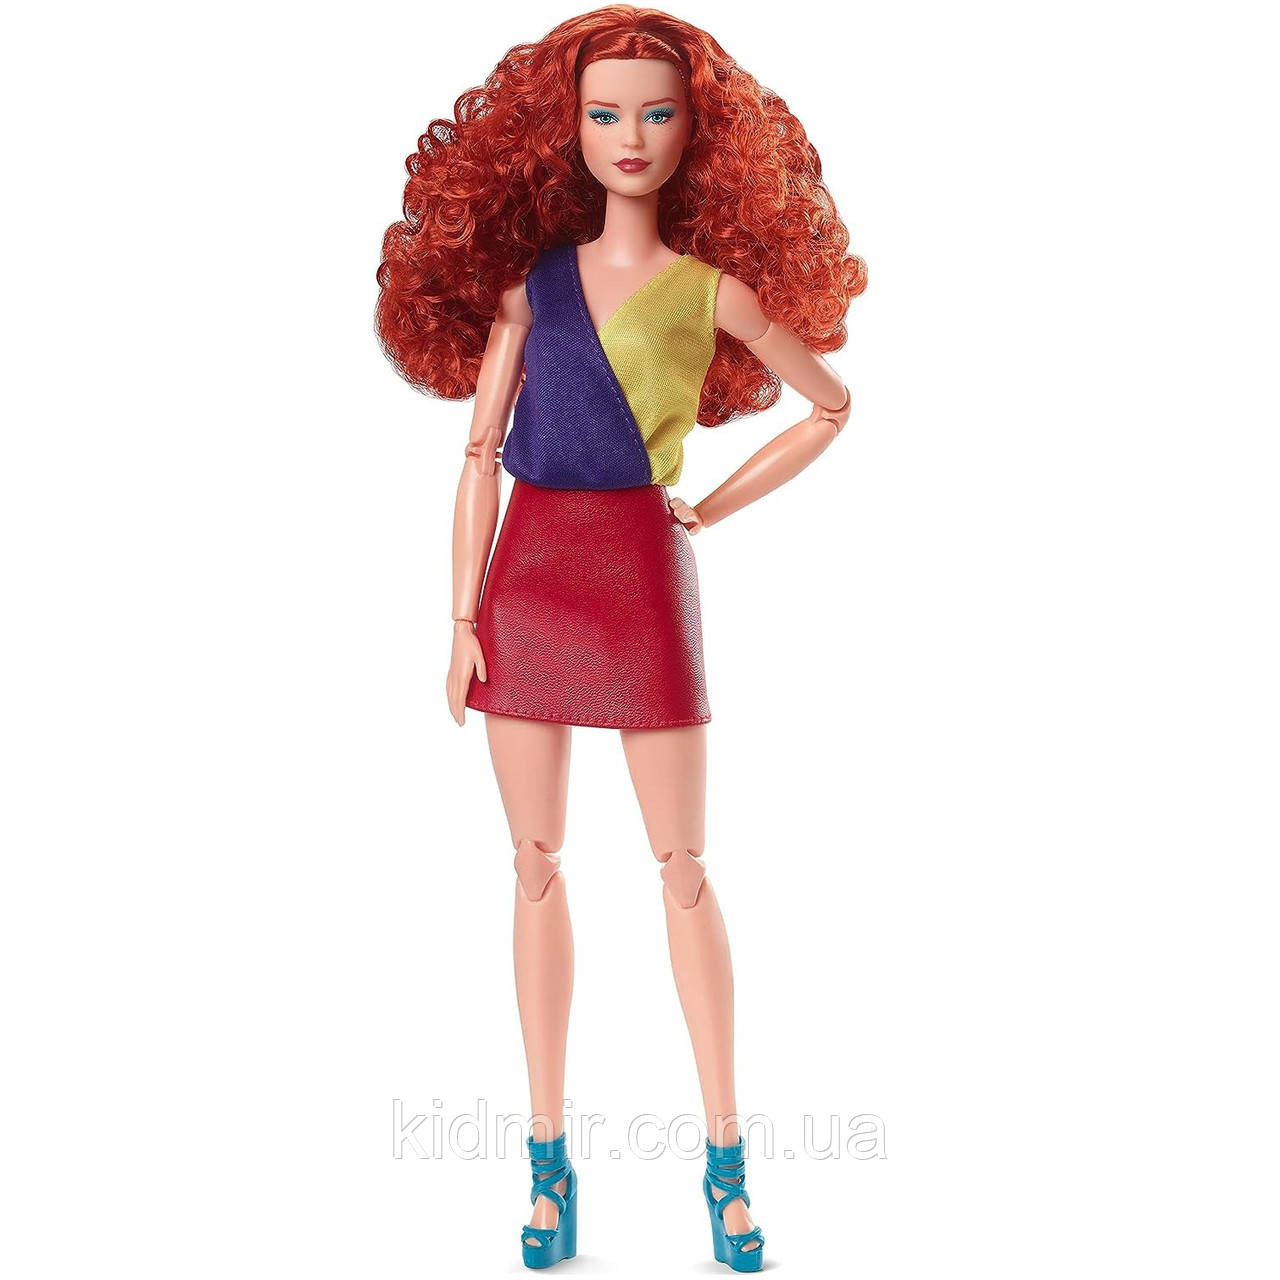 Лялька Барбі Руда з кучерявим волоссям Колор-блок Barbie Signature Looks HJW80